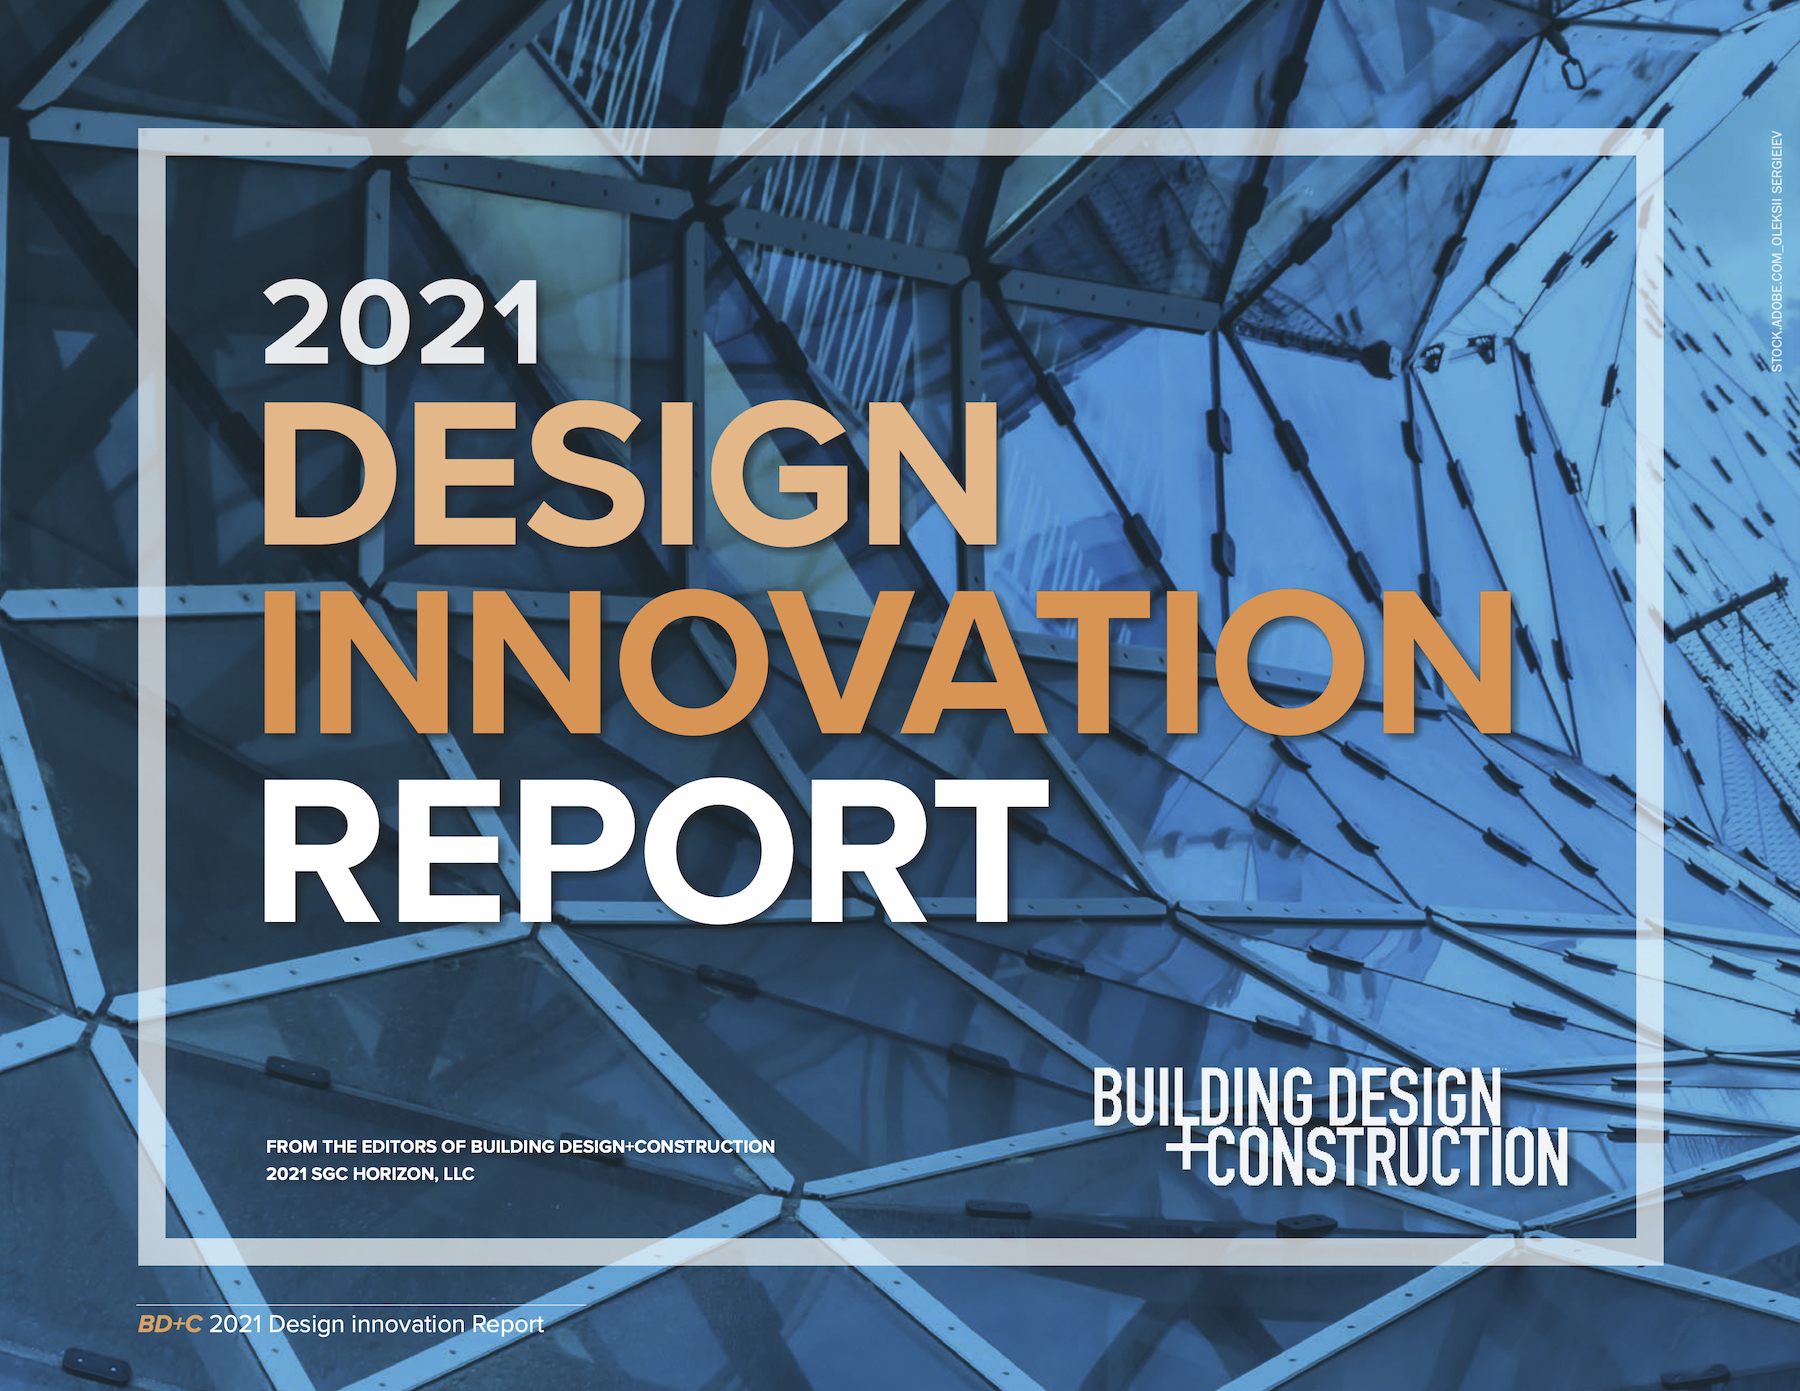 Download BD+C’s 2021 Design Innovations Report